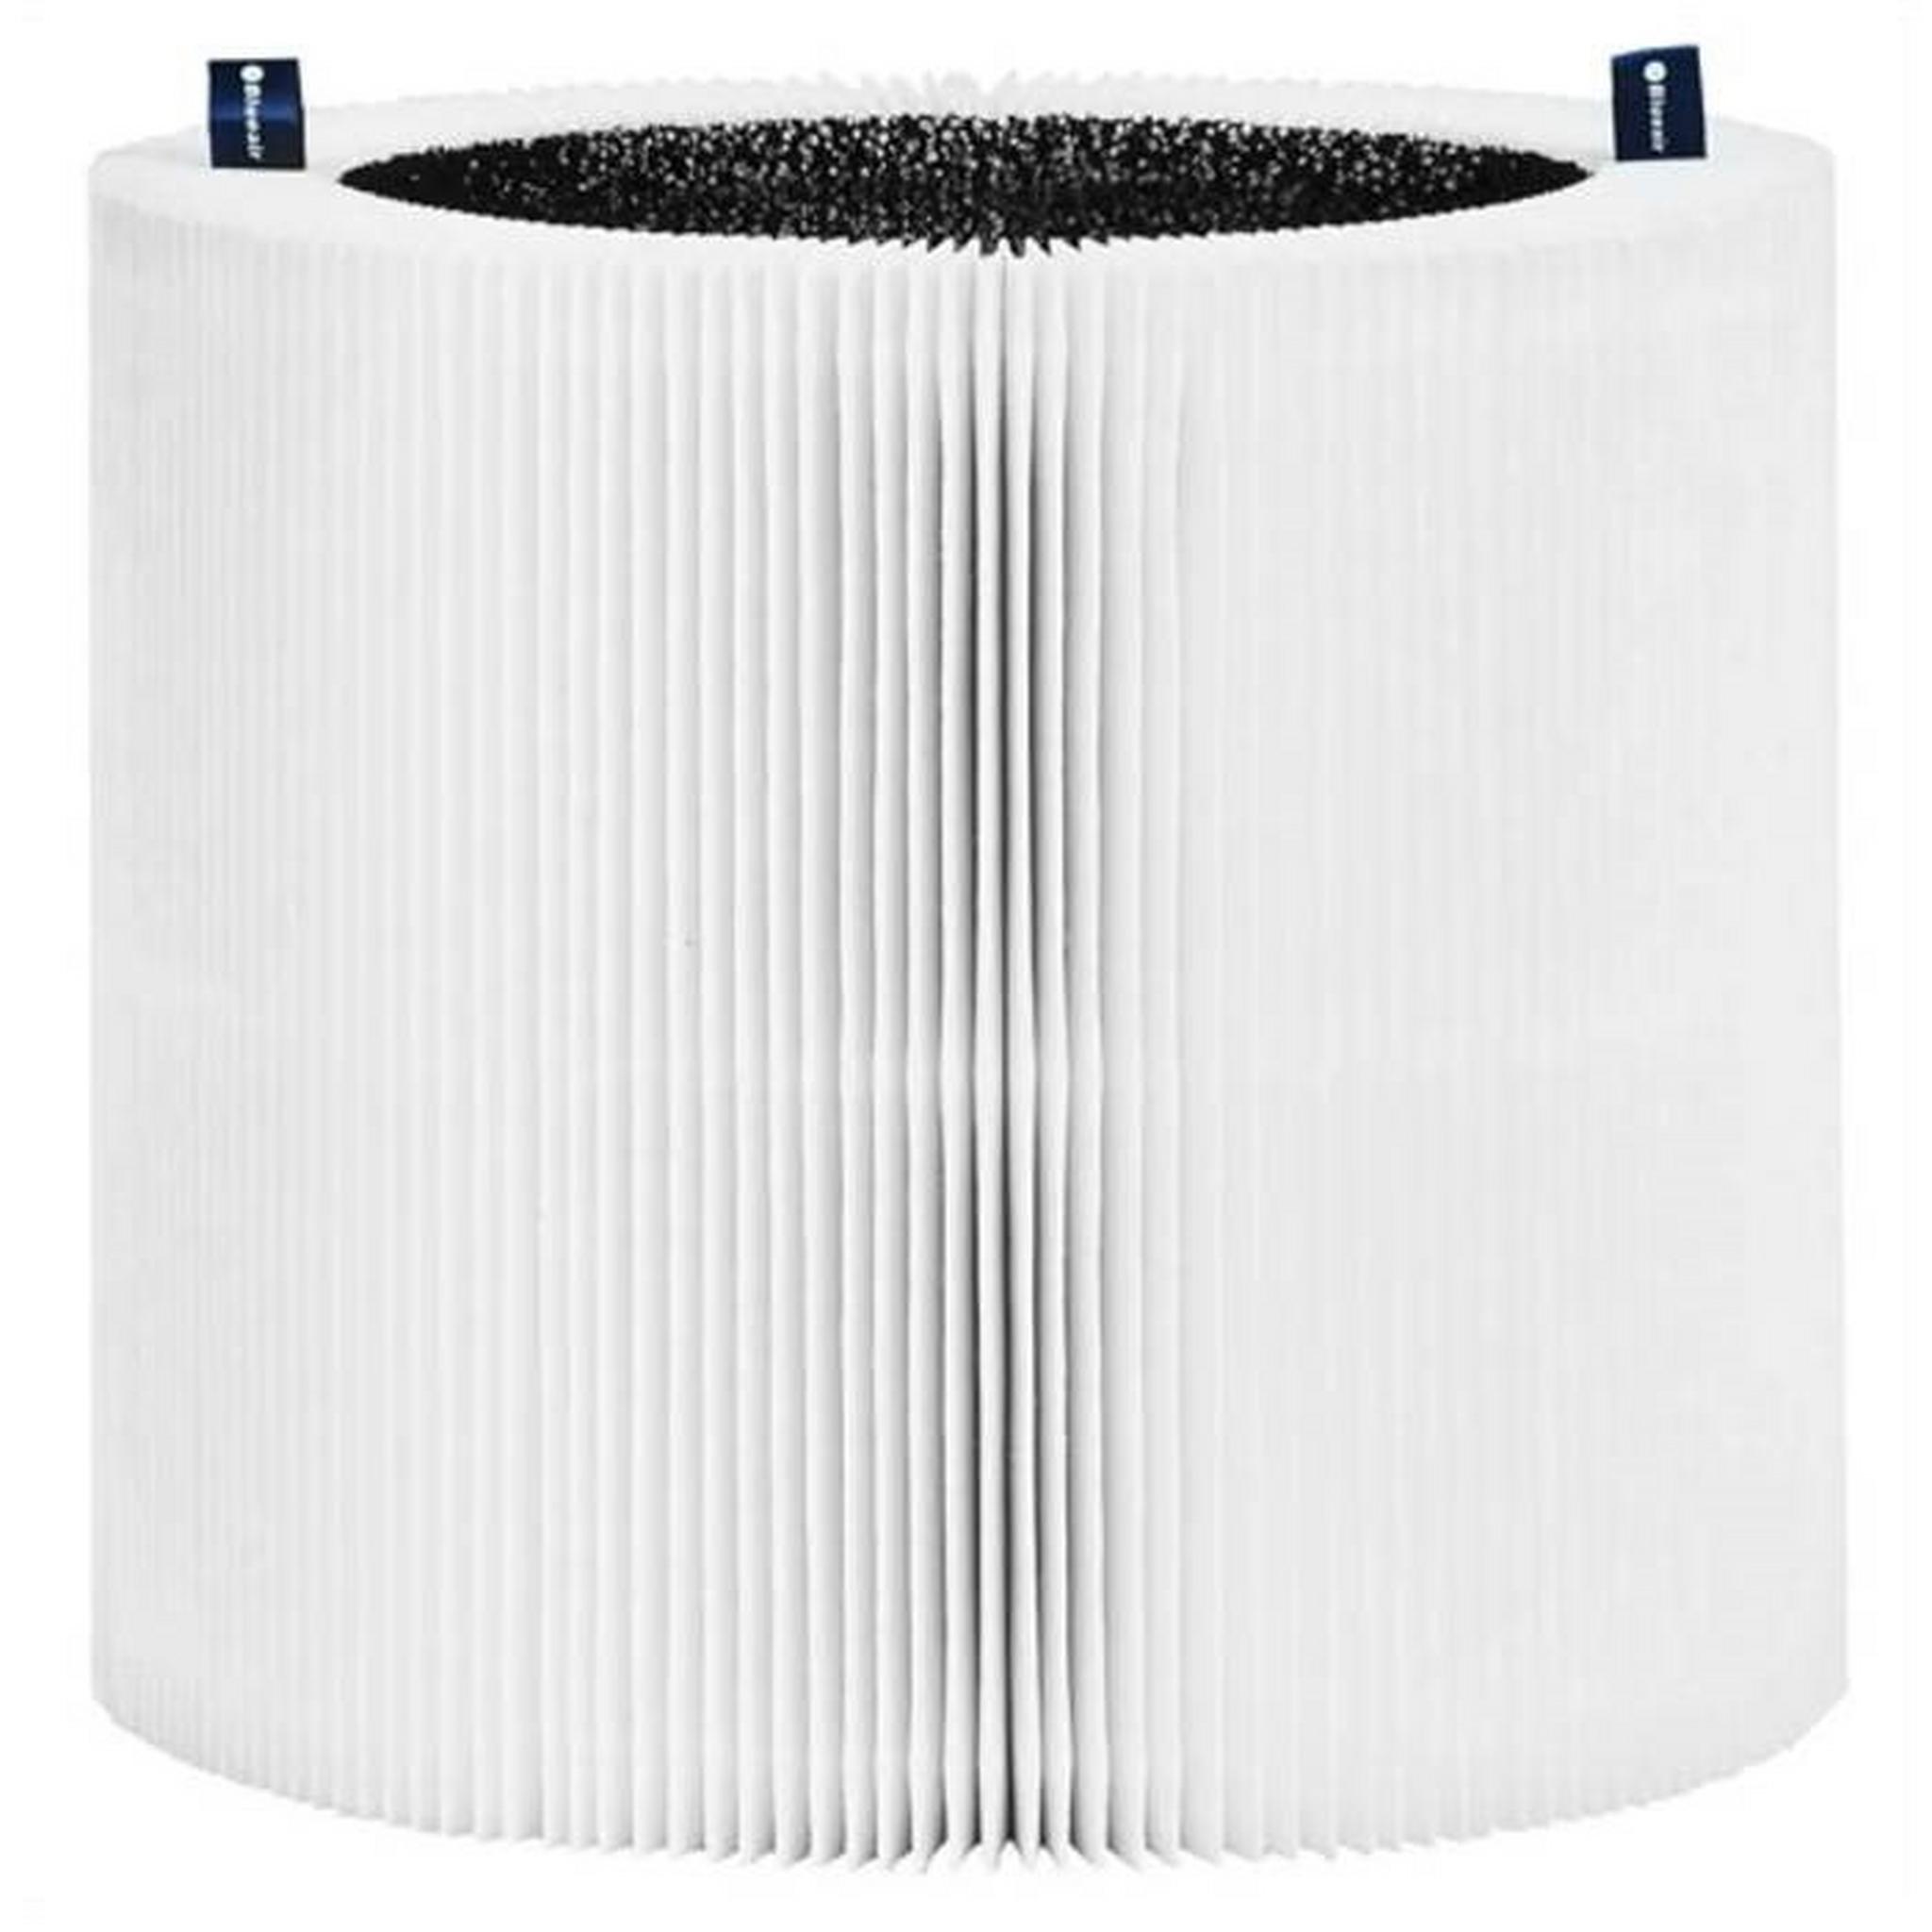 Blueair Particle + Carbon Filter For Air Purifier 3250, 110410